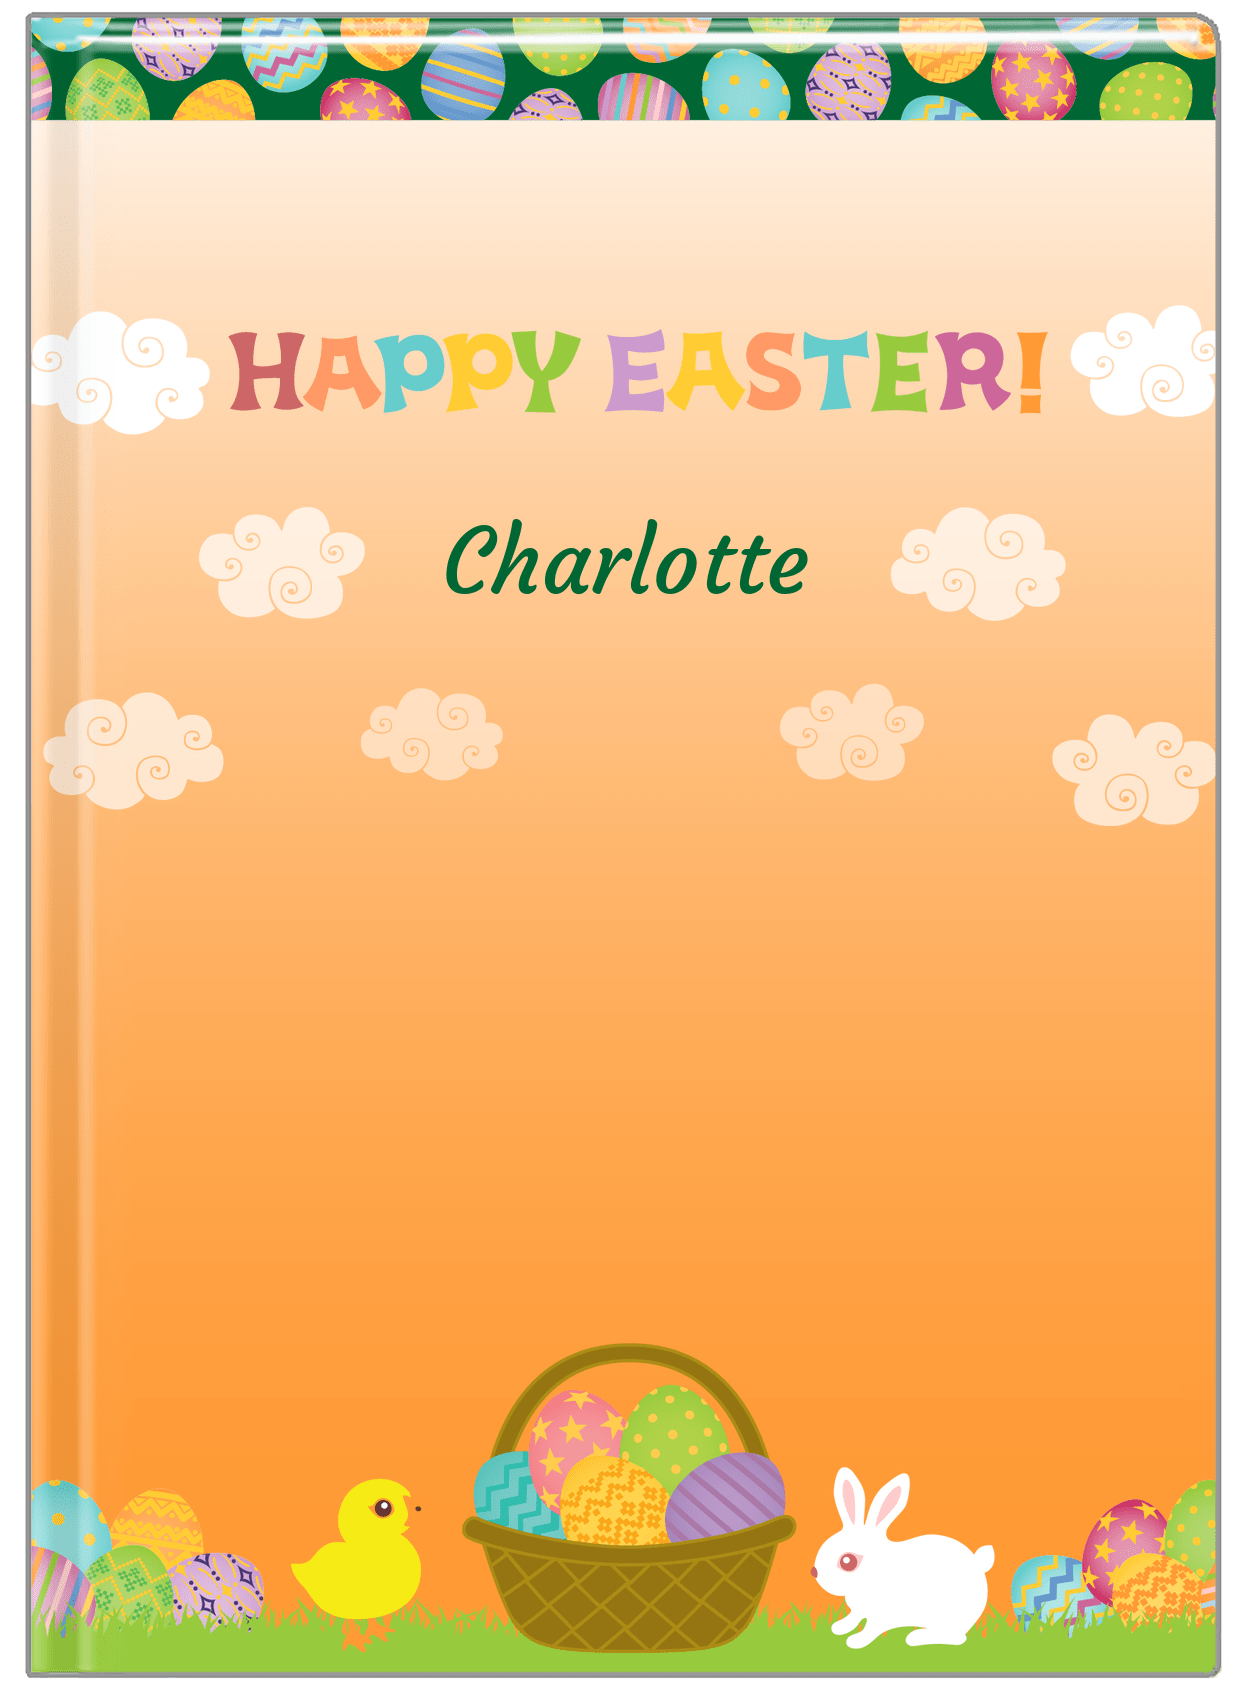 Personalized Easter Journal V - Easter Basket - Orange Background - Front View